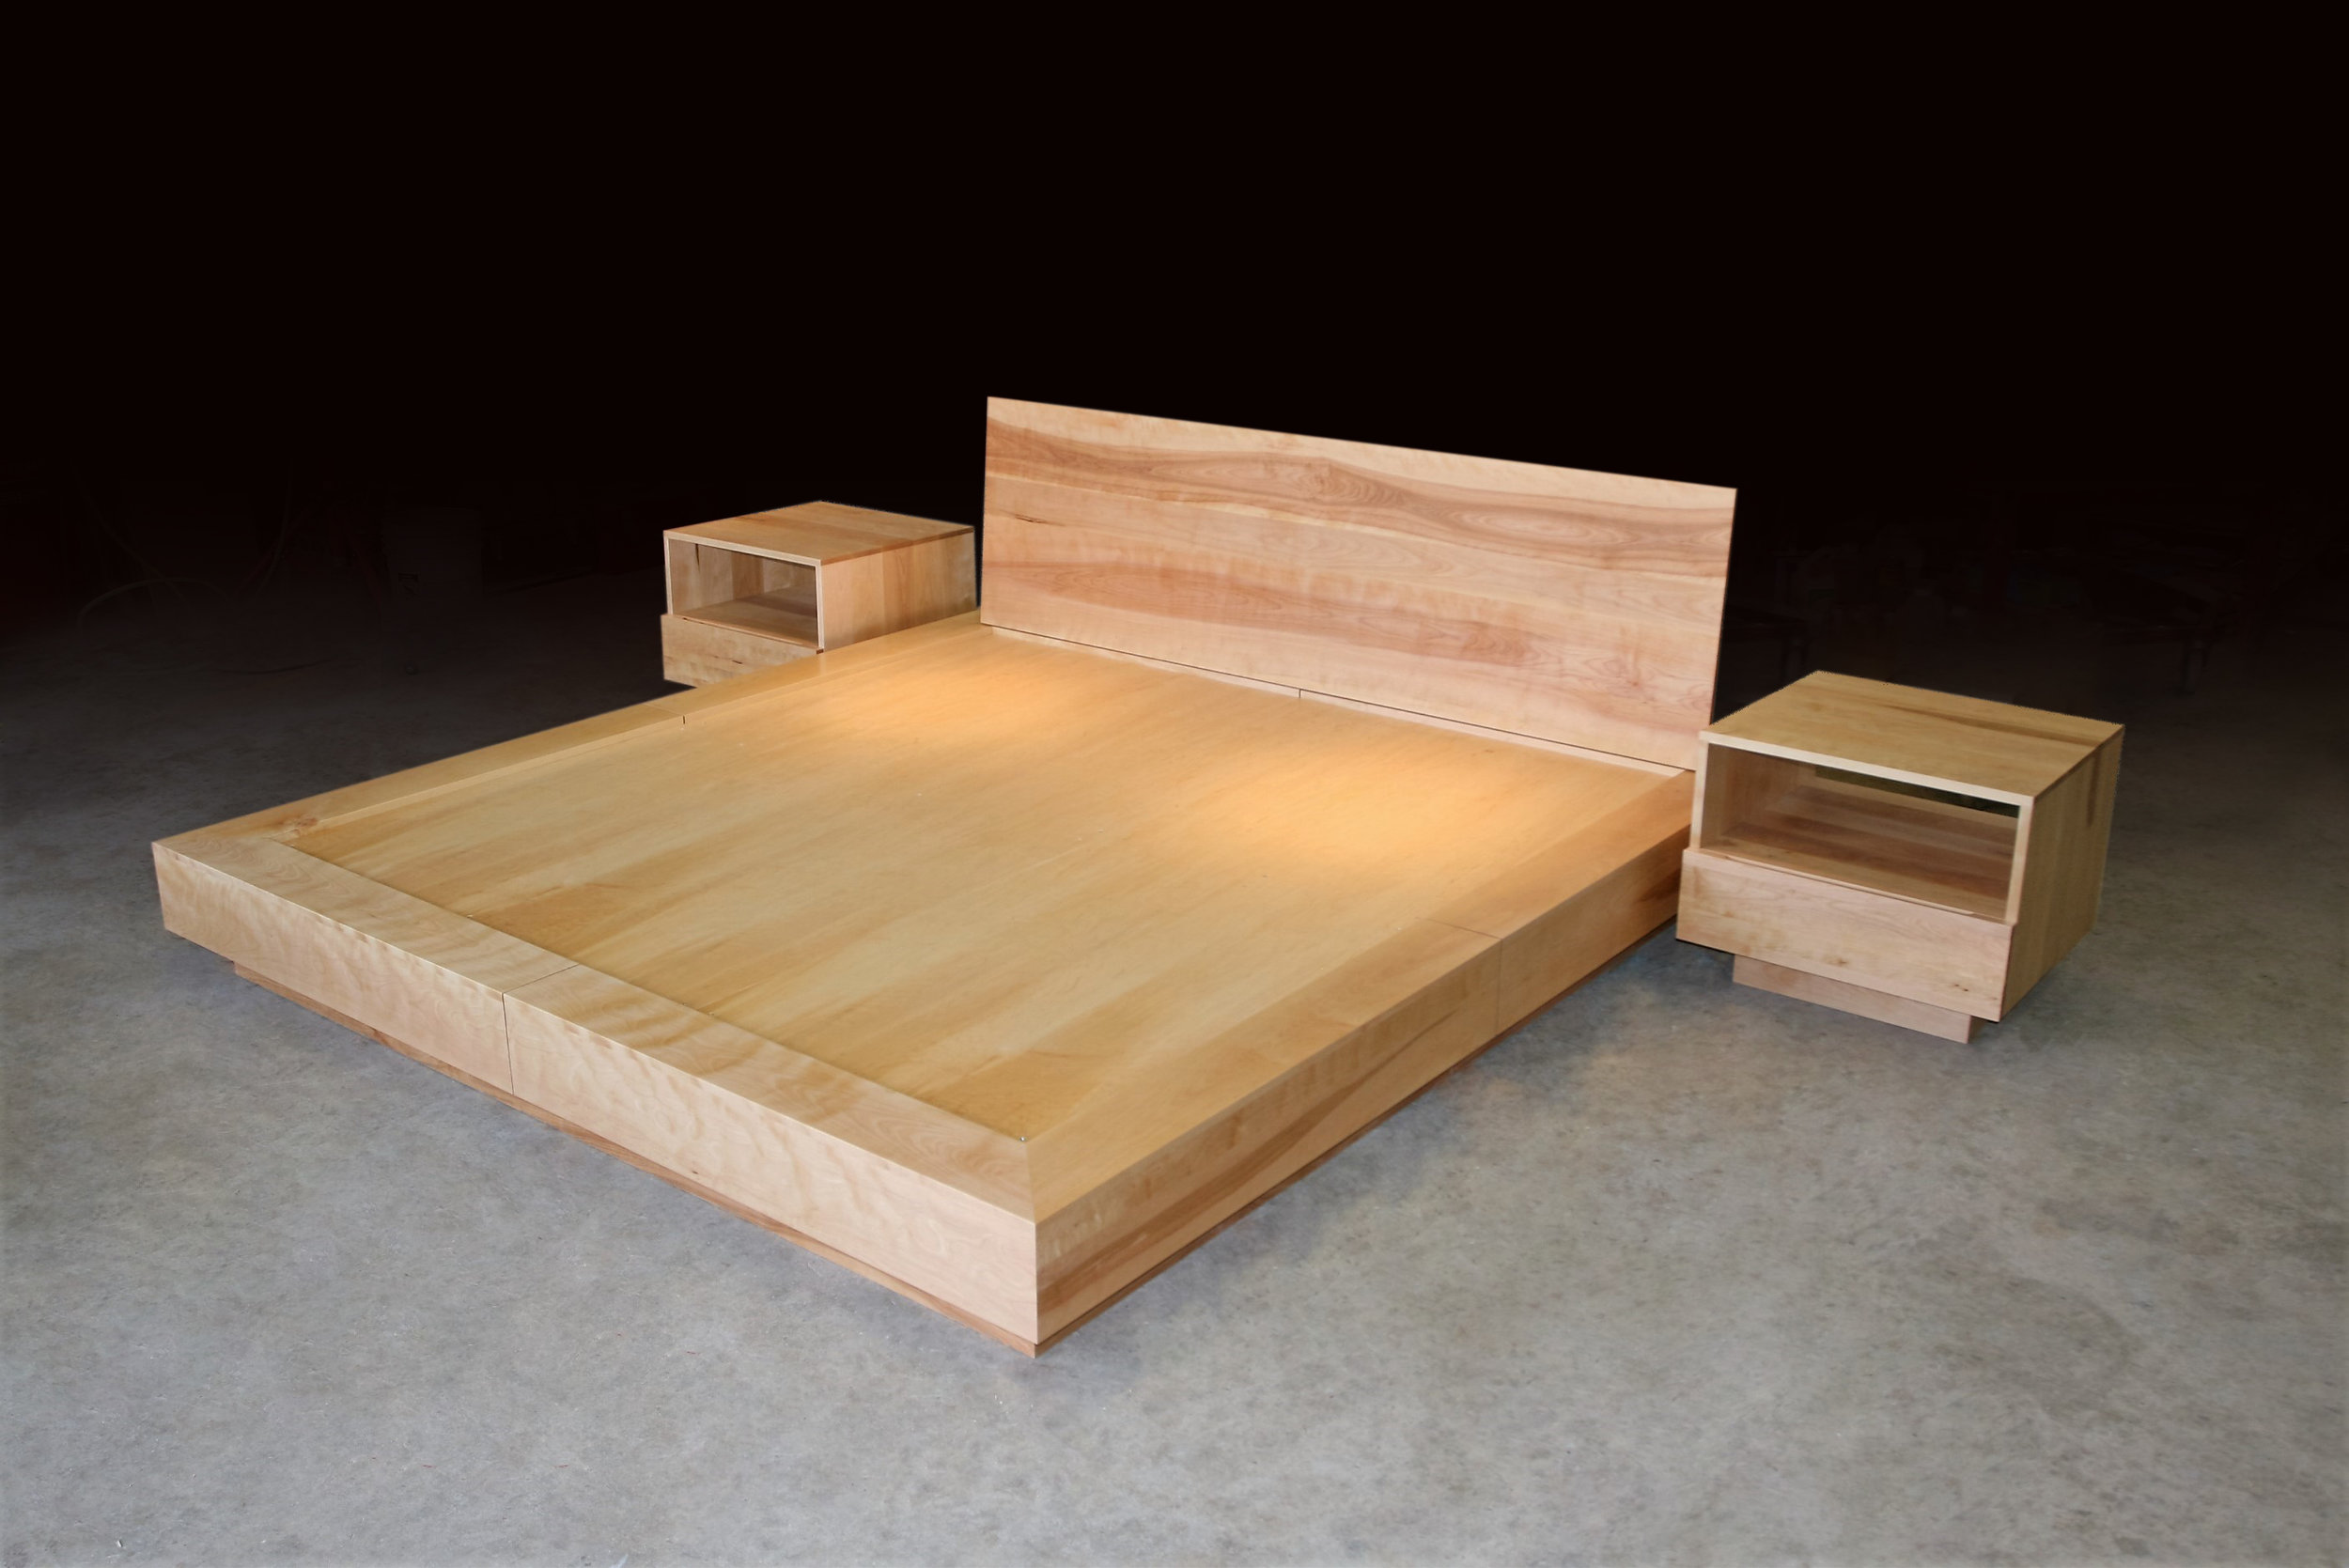 belzer bed (shown with nightsatnds) 1.jpg